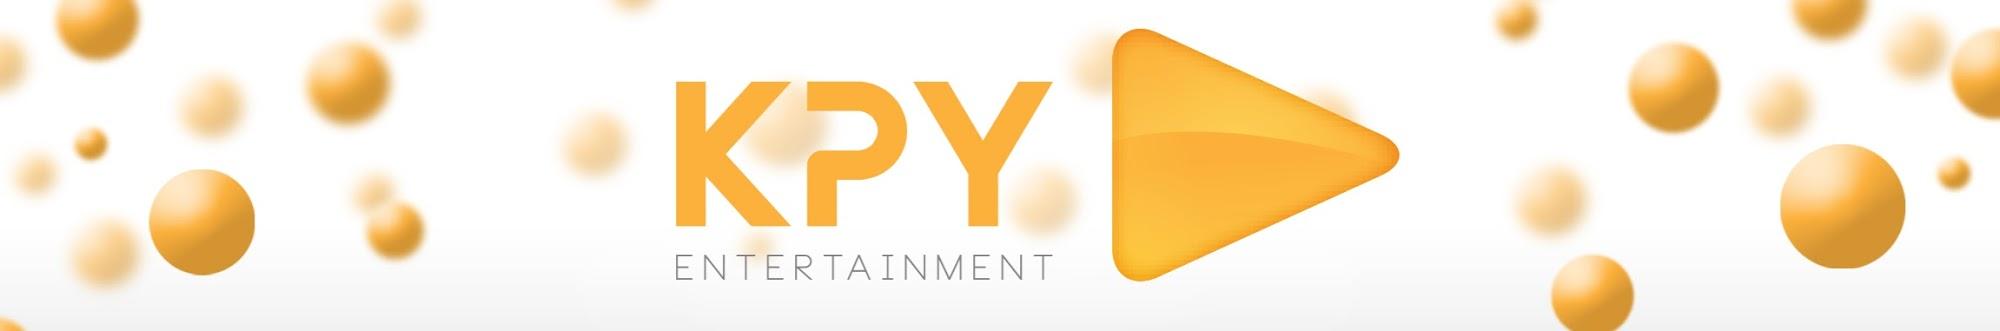 KPY Entertainment